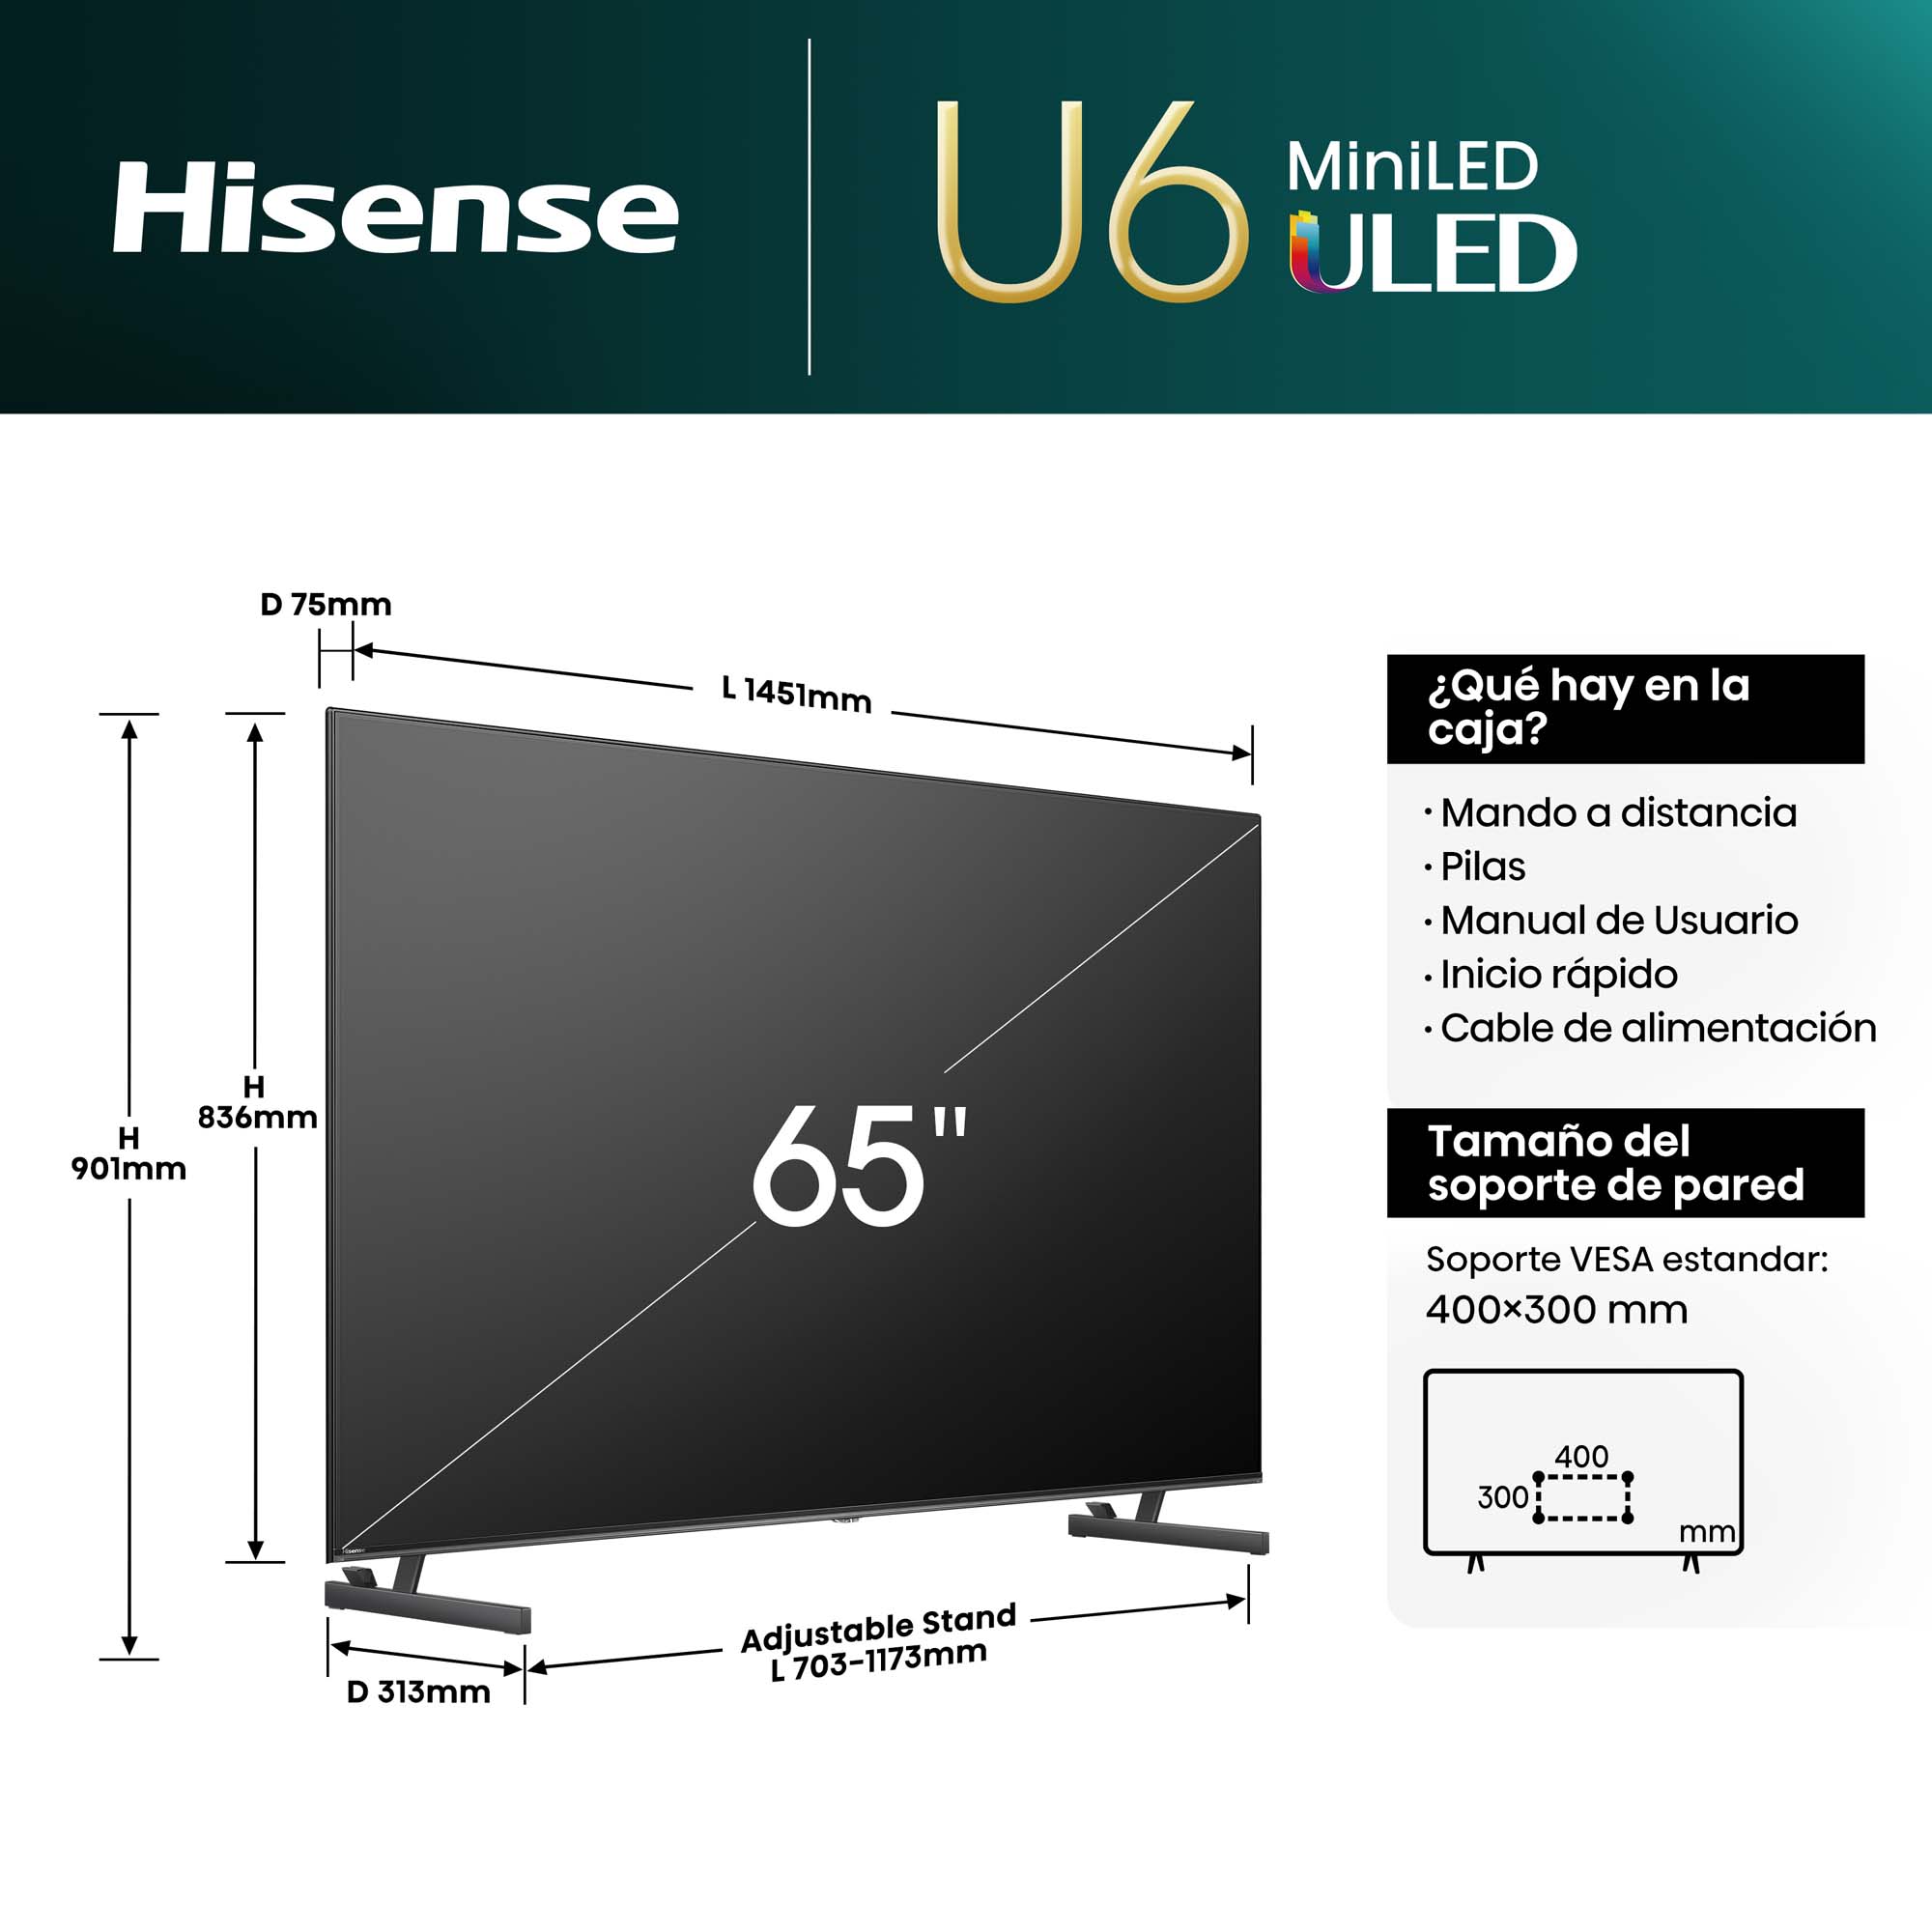 Hisense - Mini-LED TV 65U6NQ, Quantum Dot Colour, Full Array Local Dimming, Dolby Vision & Dolby Atmos